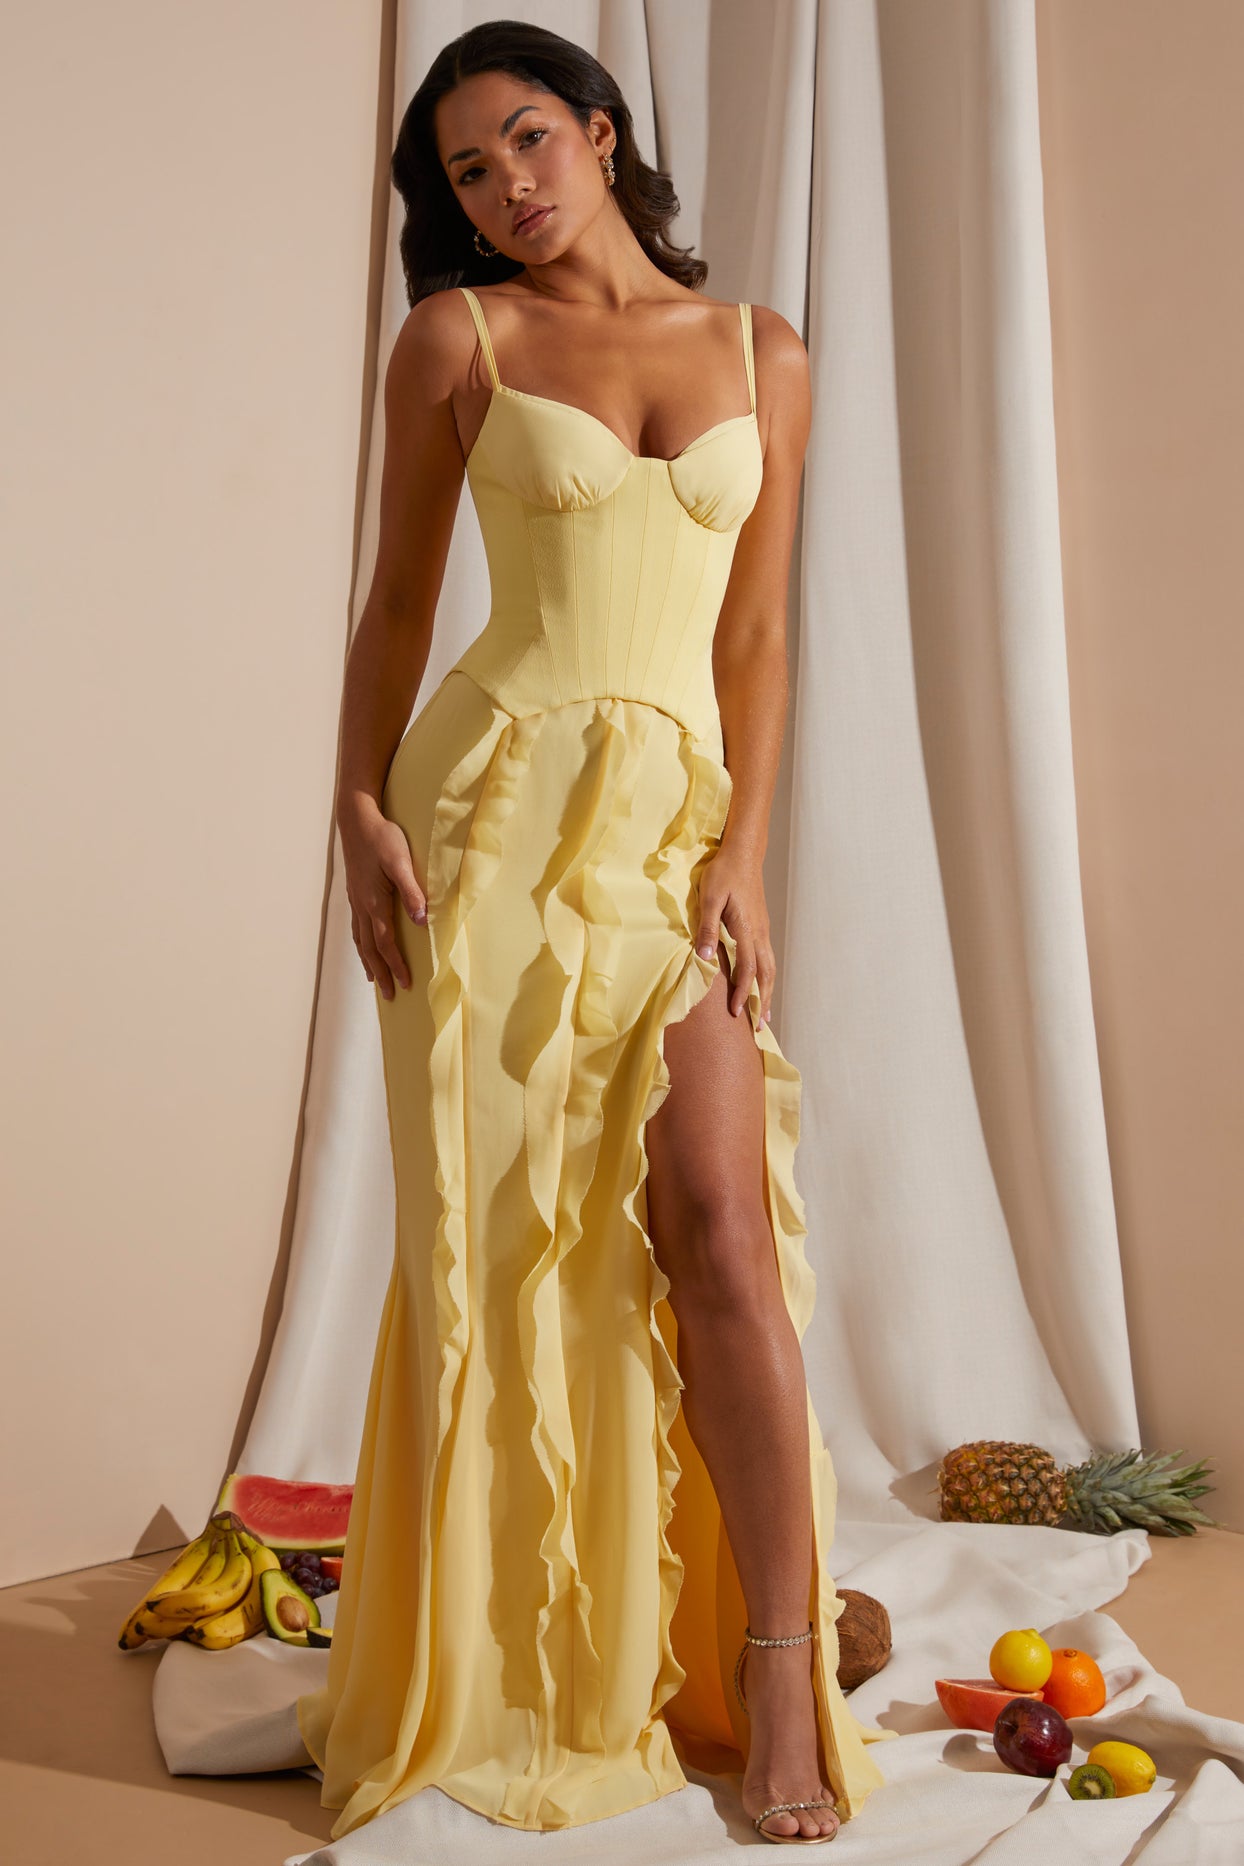 Perrine Corset Frill Skirt Maxi Dress in Yellow